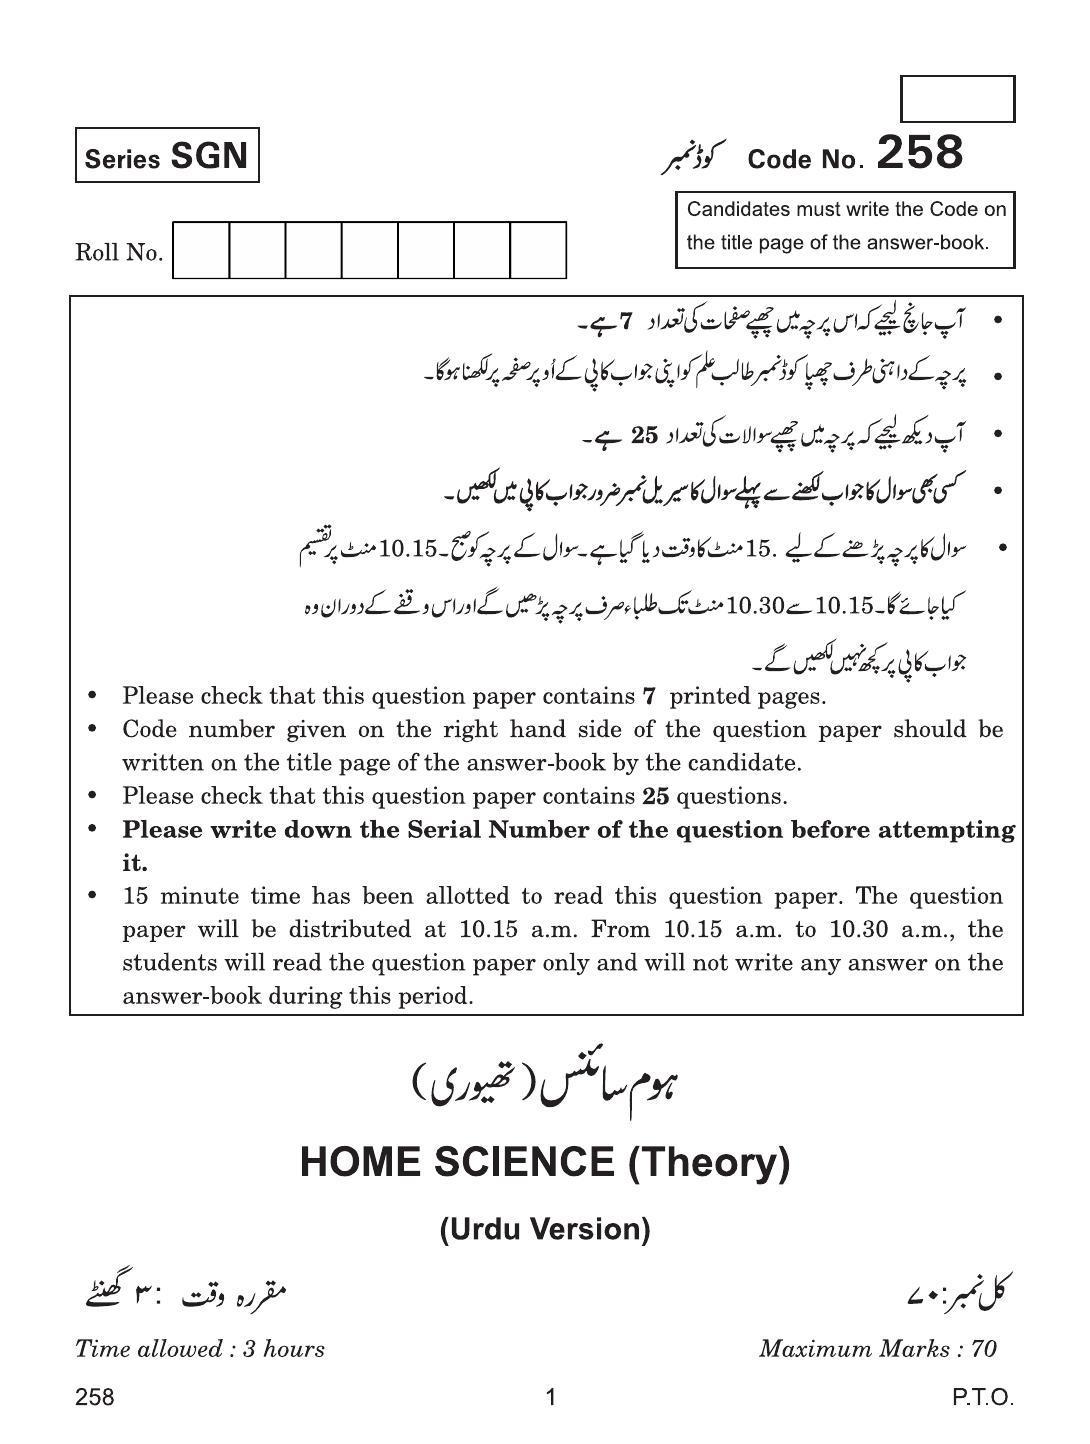 CBSE Class 12 258 (Home Science Urdu) 2018 Question Paper - Page 1